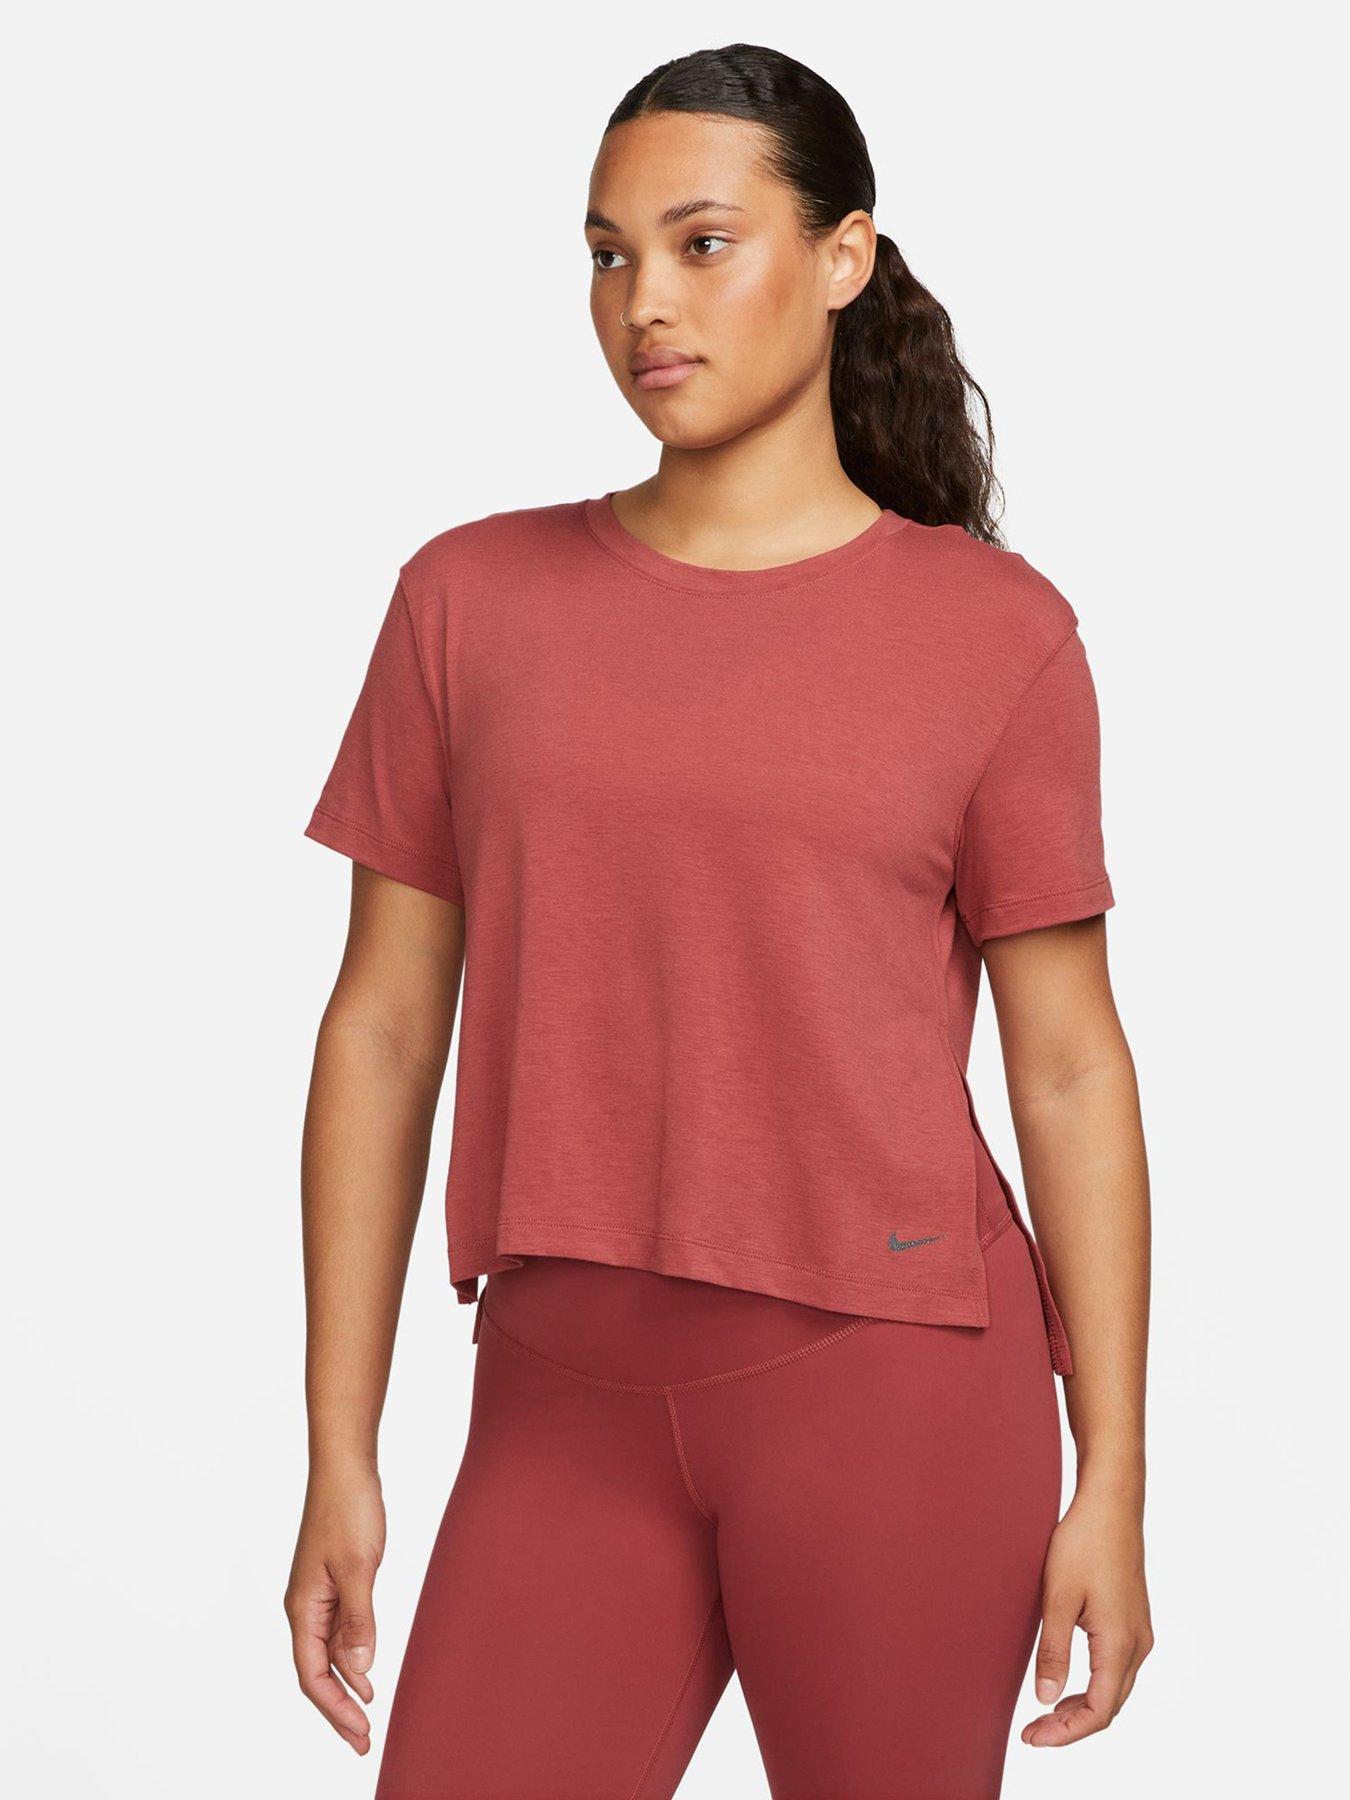 Nike Yoga Dri-FIT Women's Top - Grey